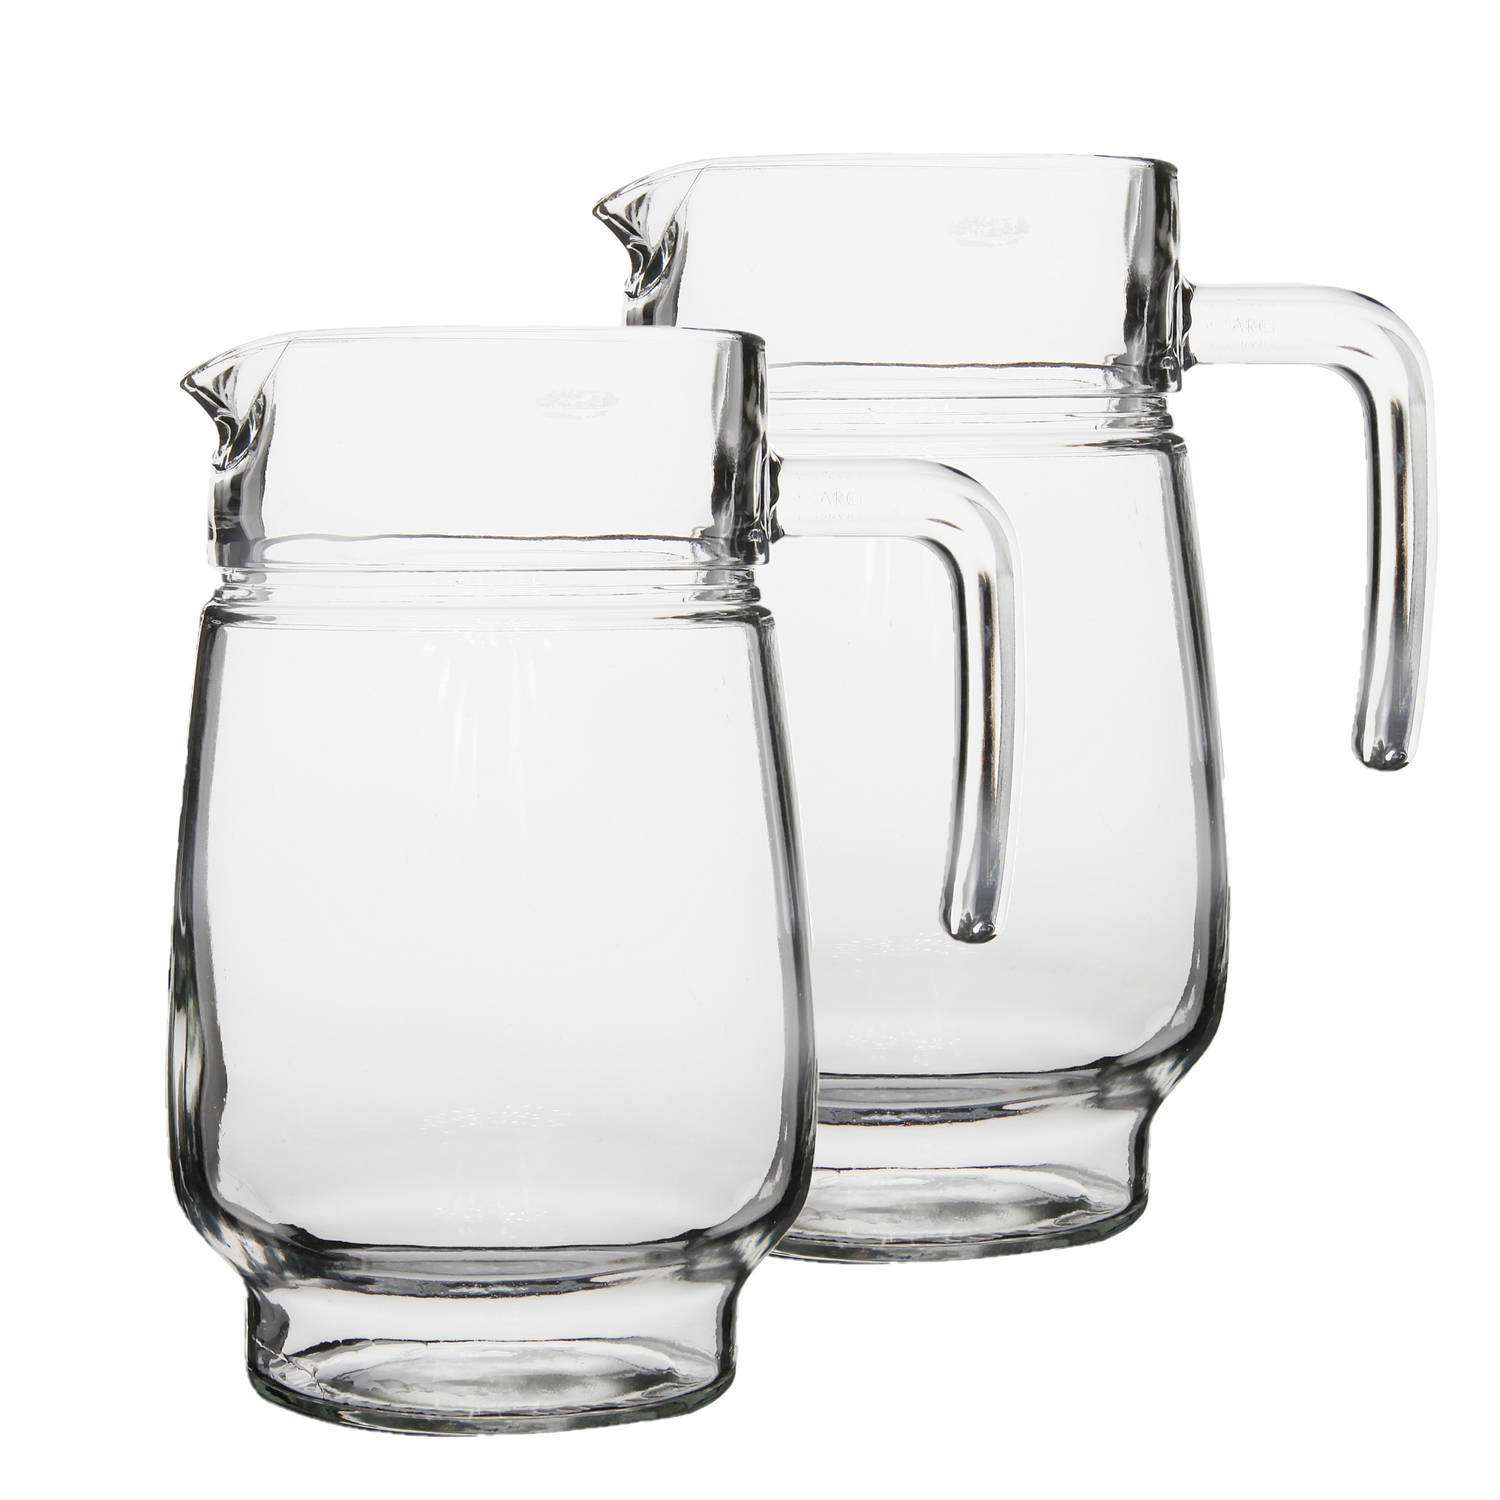 progressief Kardinaal reinigen 2x stuks glazen schenkkannen/karaffen 1,6 liter - Waterkannen | Blokker